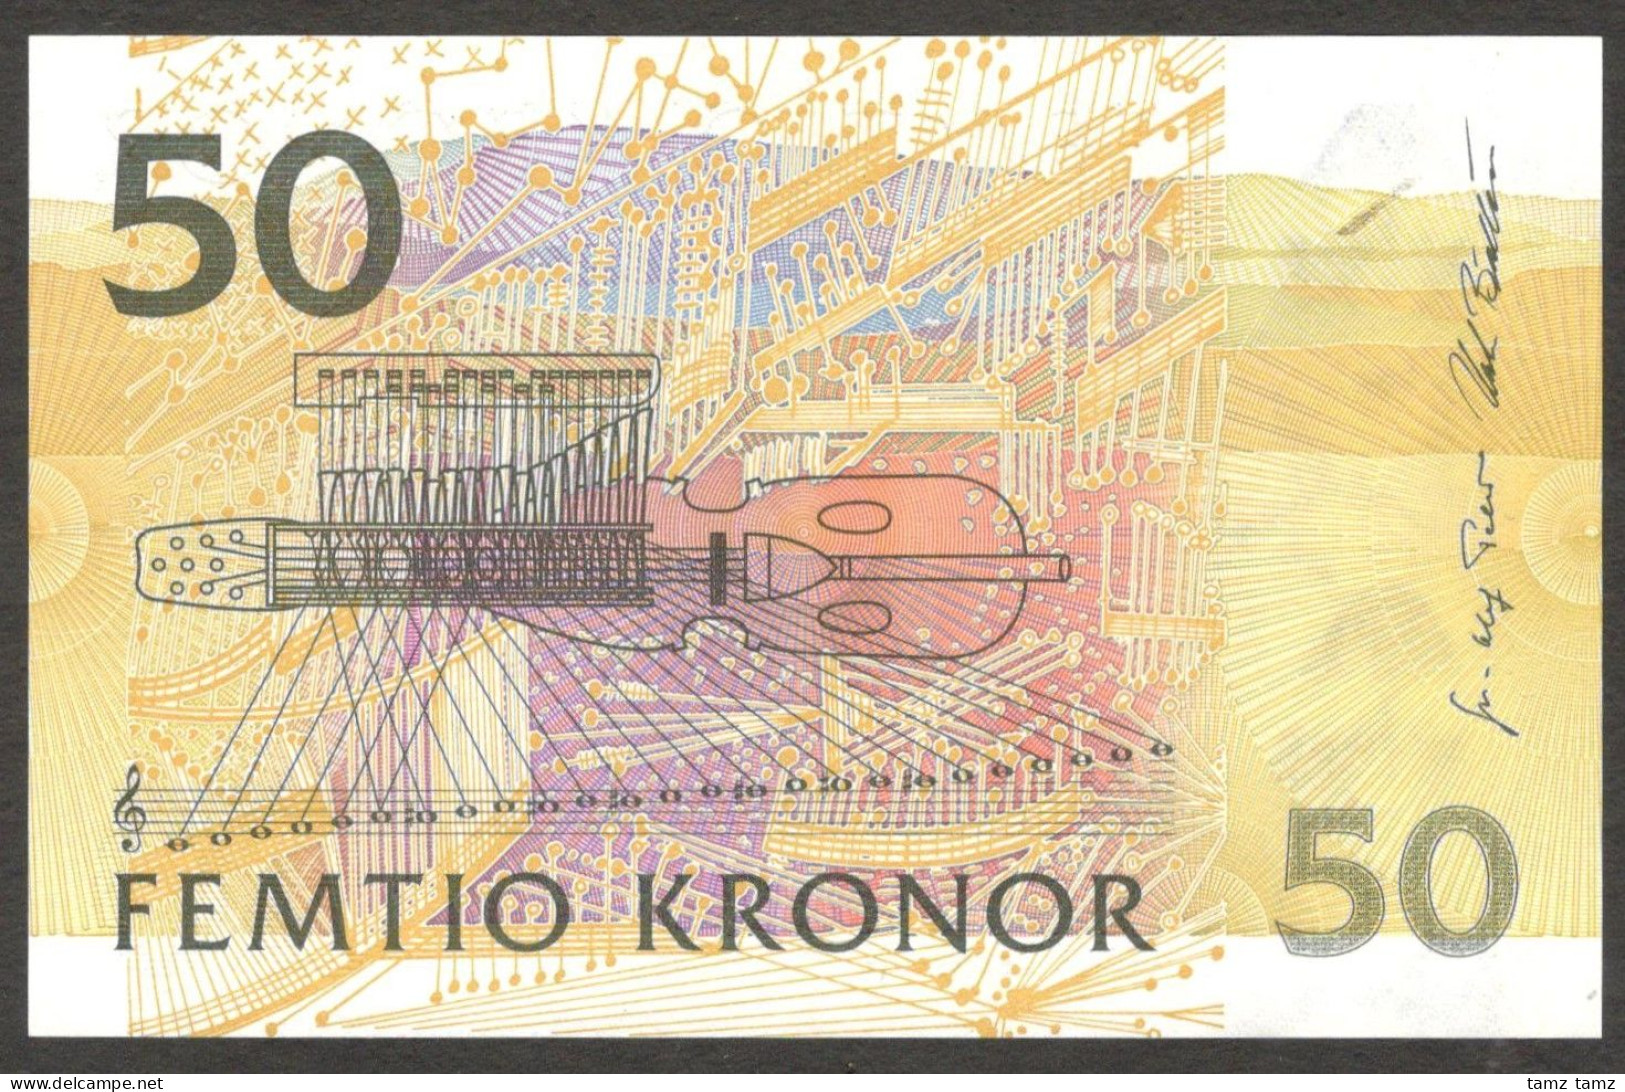 Sweden 50 Kronor Jenny Lind 1996 UNC Beautiful Banknotes - Zweden